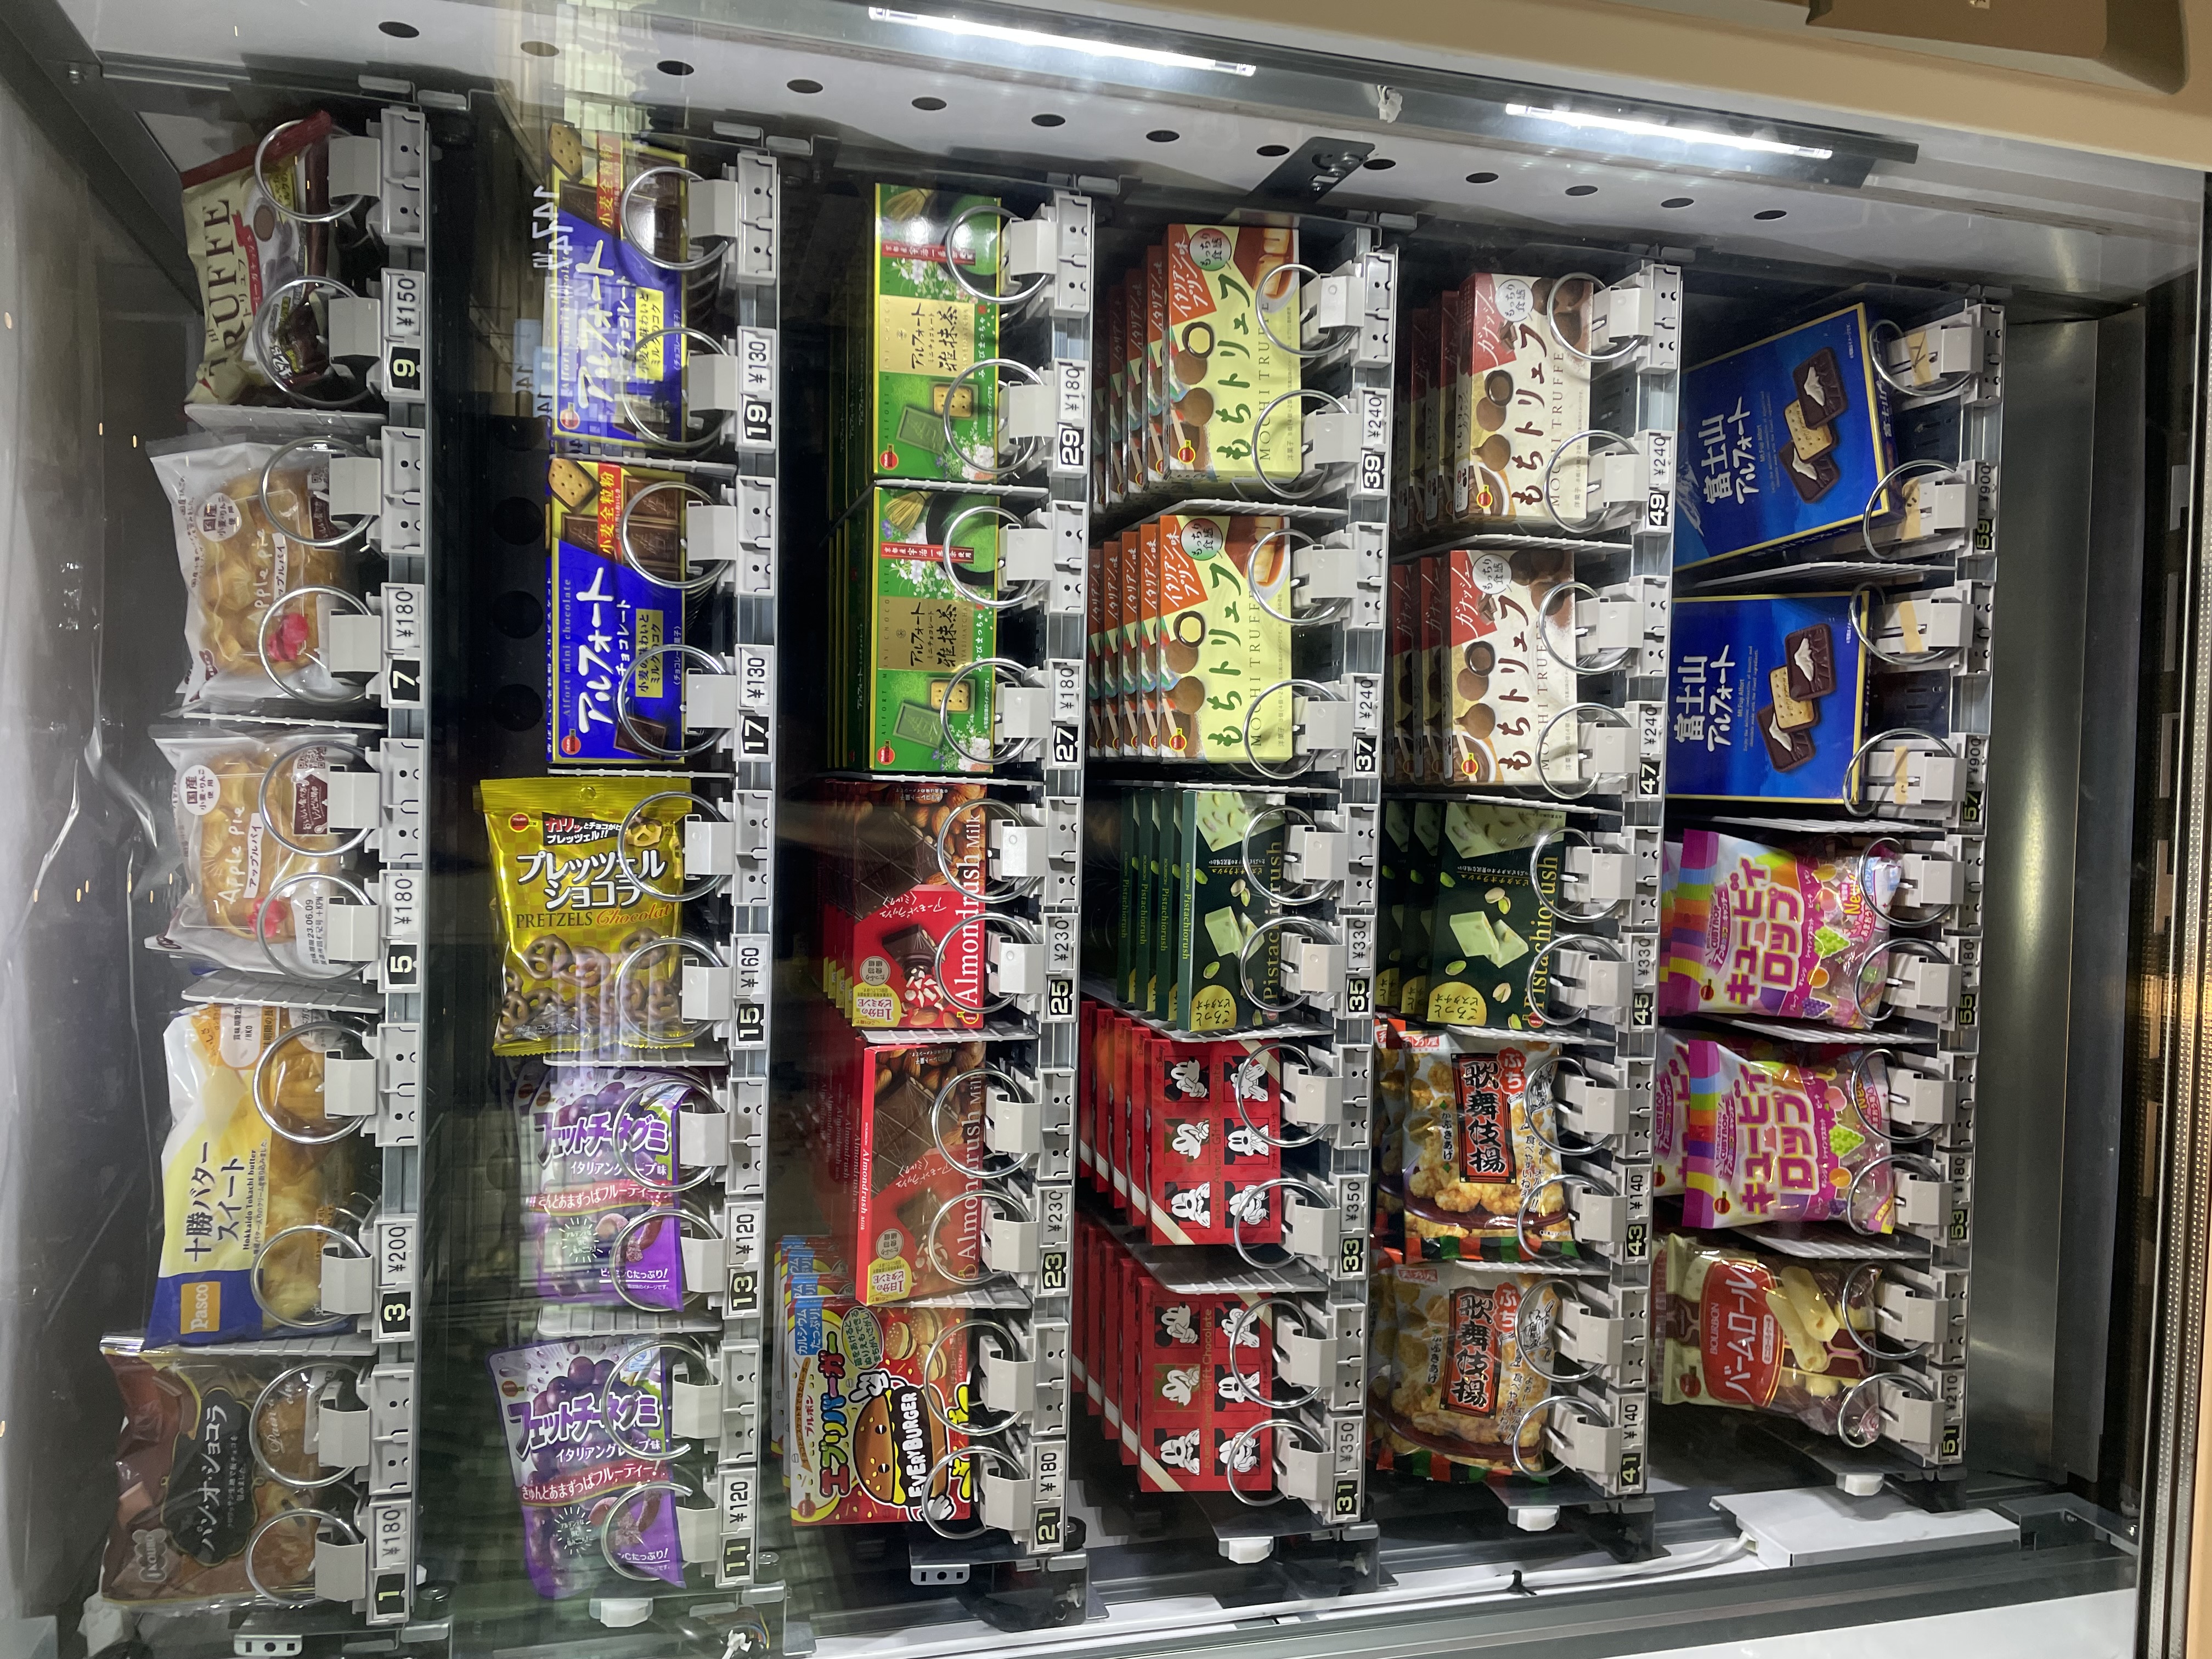 Vending machine with snacks